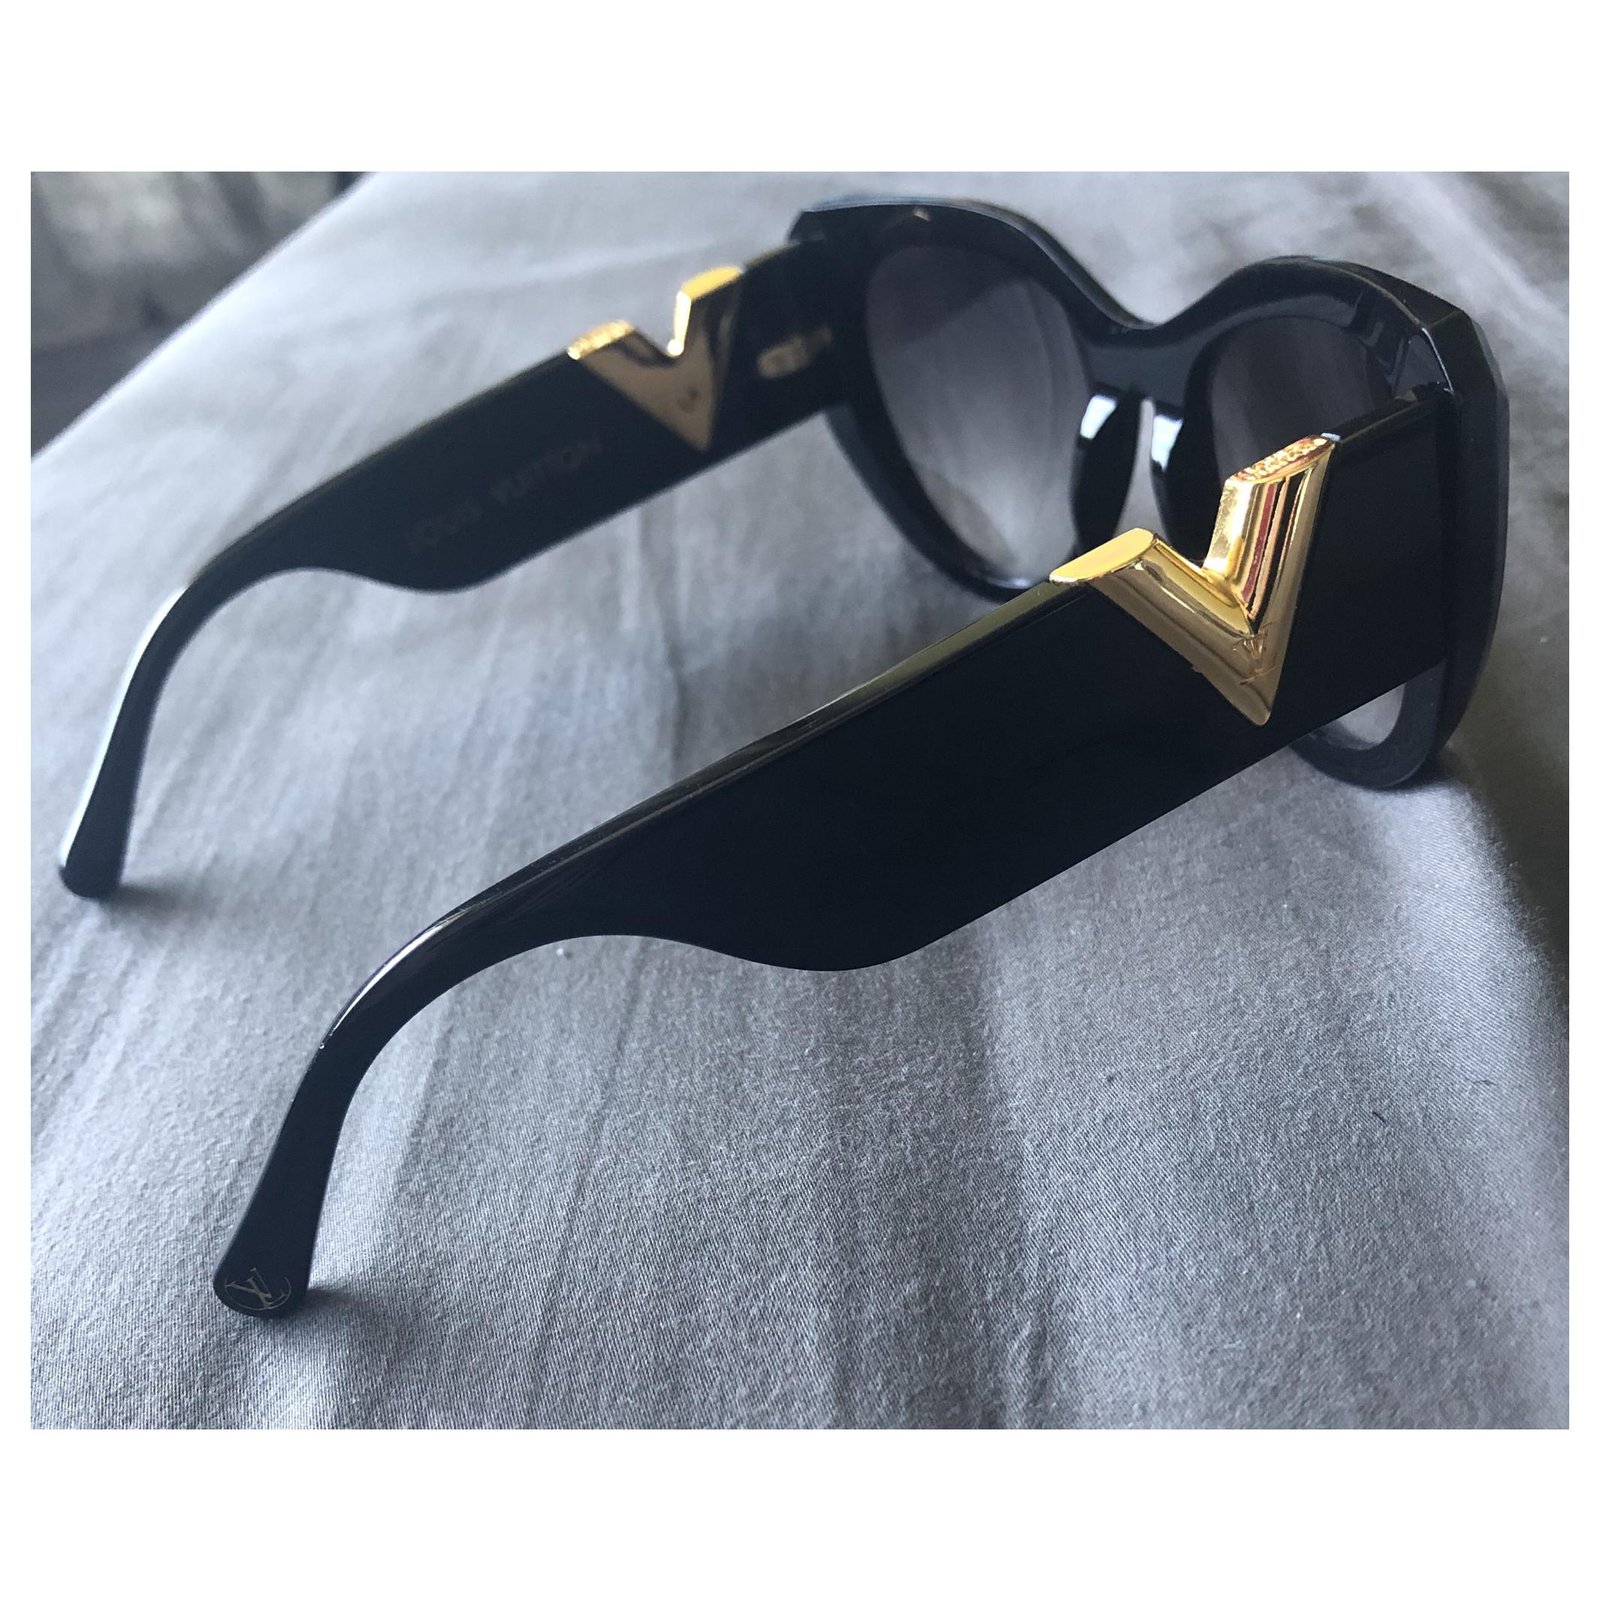 Louis Vuitton 2017 My Fair Lady Sunglasses